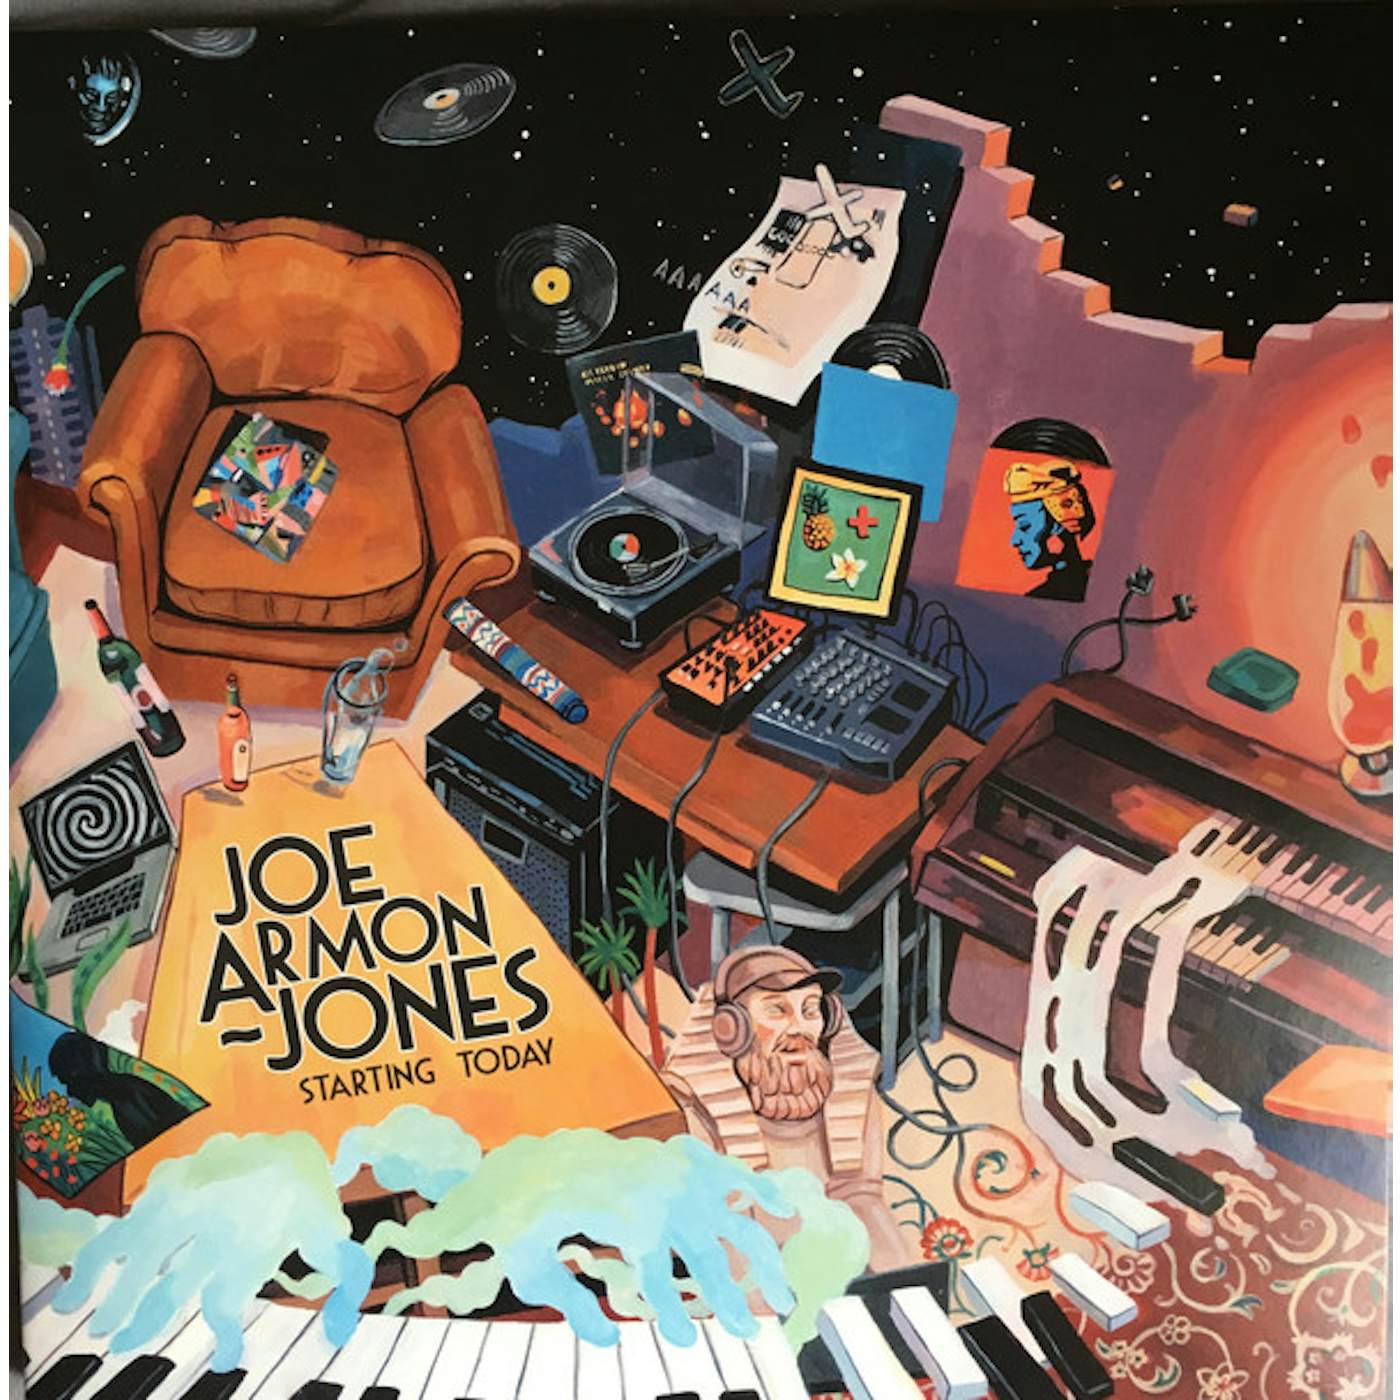 Joe Armon-Jones STARTING TODAY (RE-ISSUE) Vinyl Record